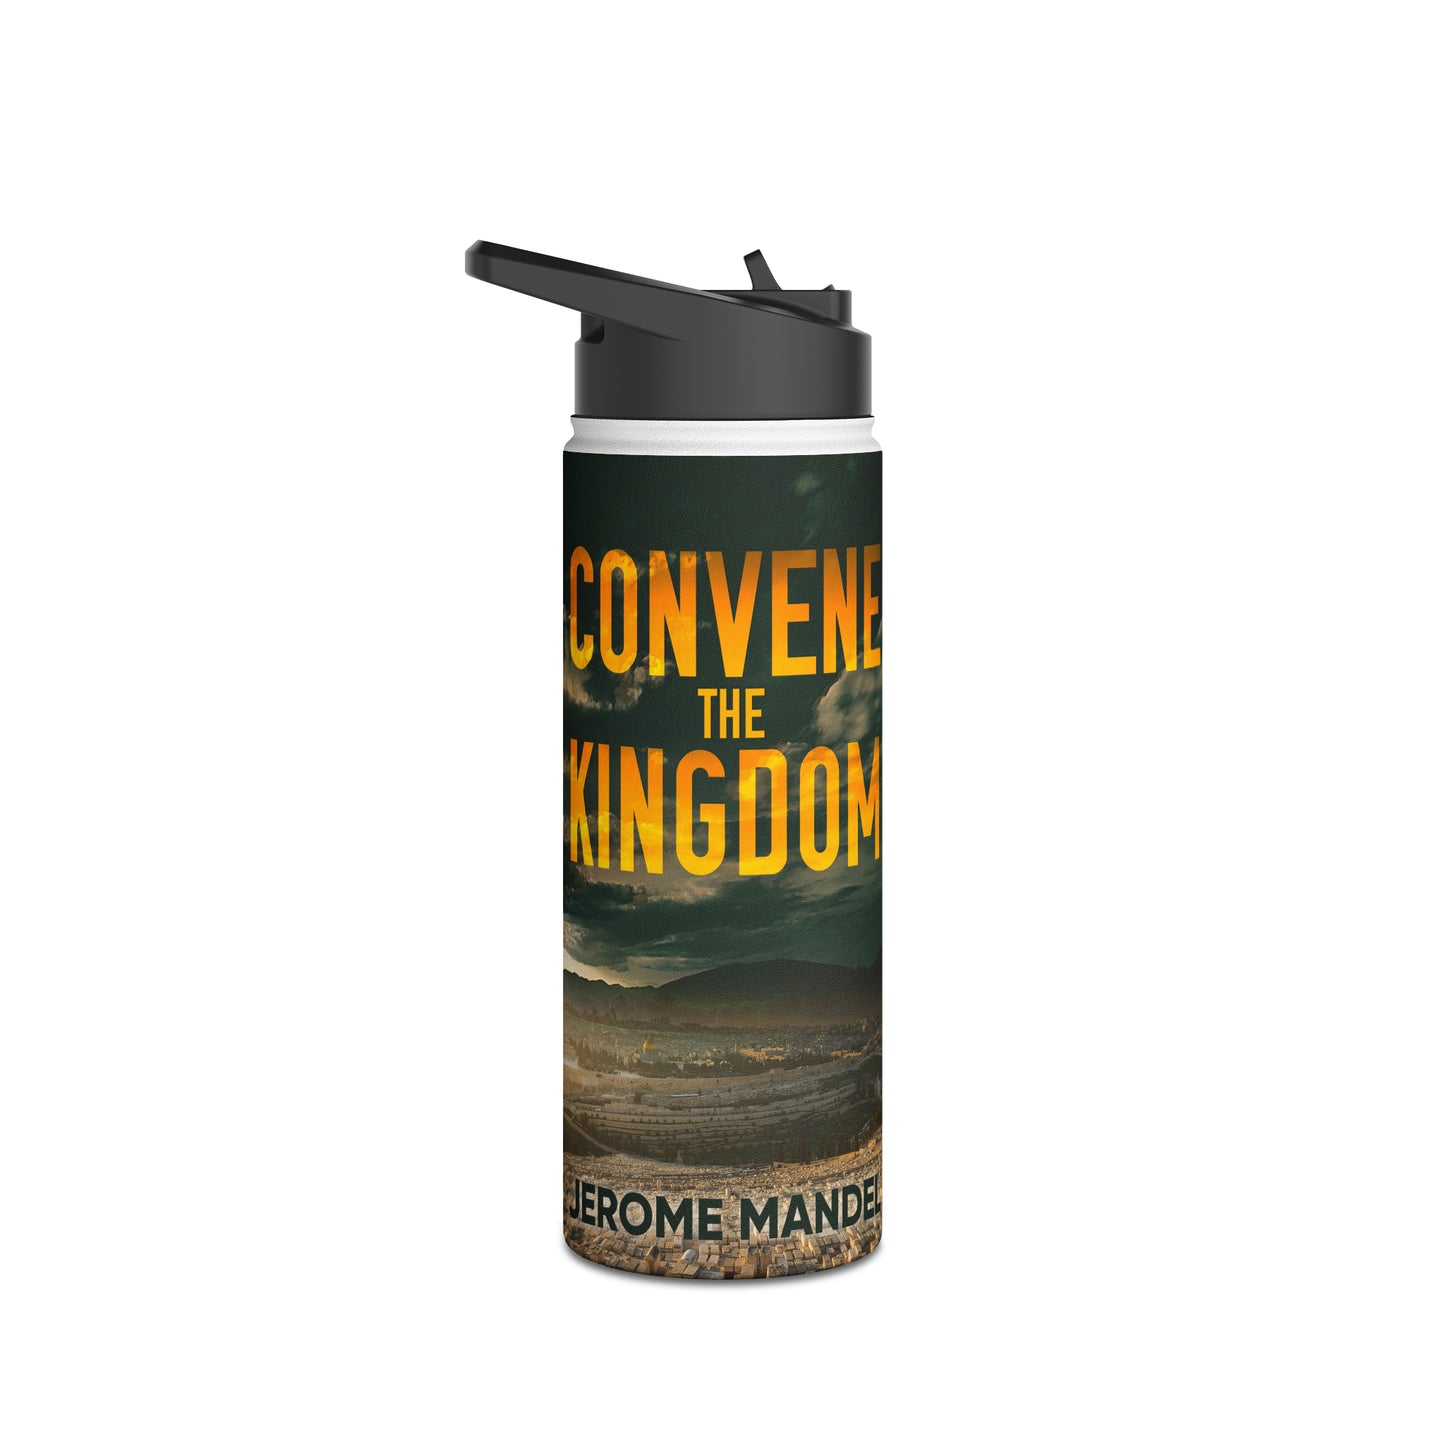 Convene The Kingdom - Stainless Steel Water Bottle